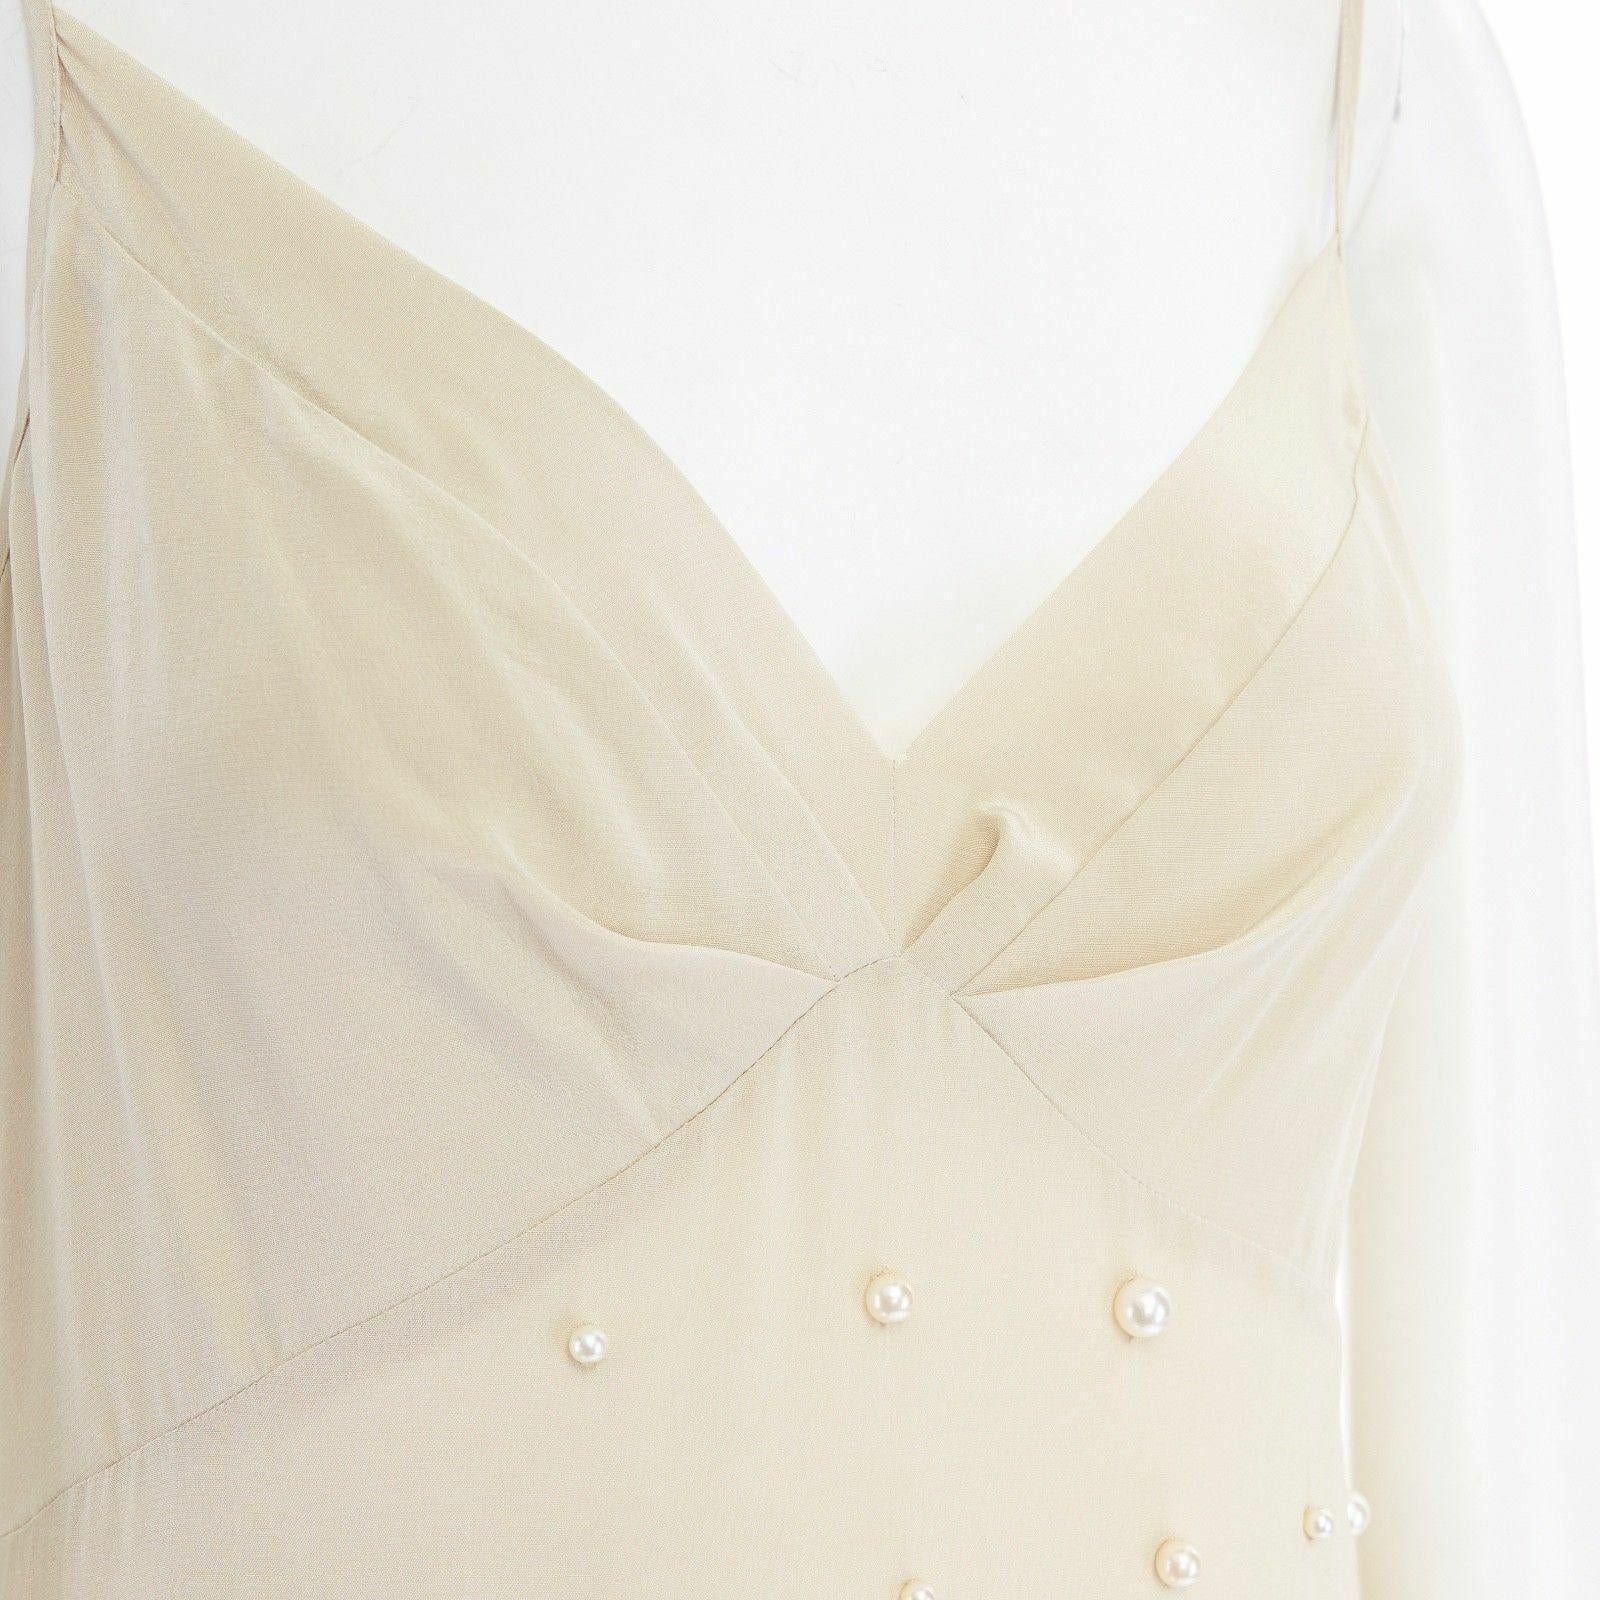 Women's new DRIES VAN NOTEN AW16 Deming beige pearl embellished slip gown dress FR36 S